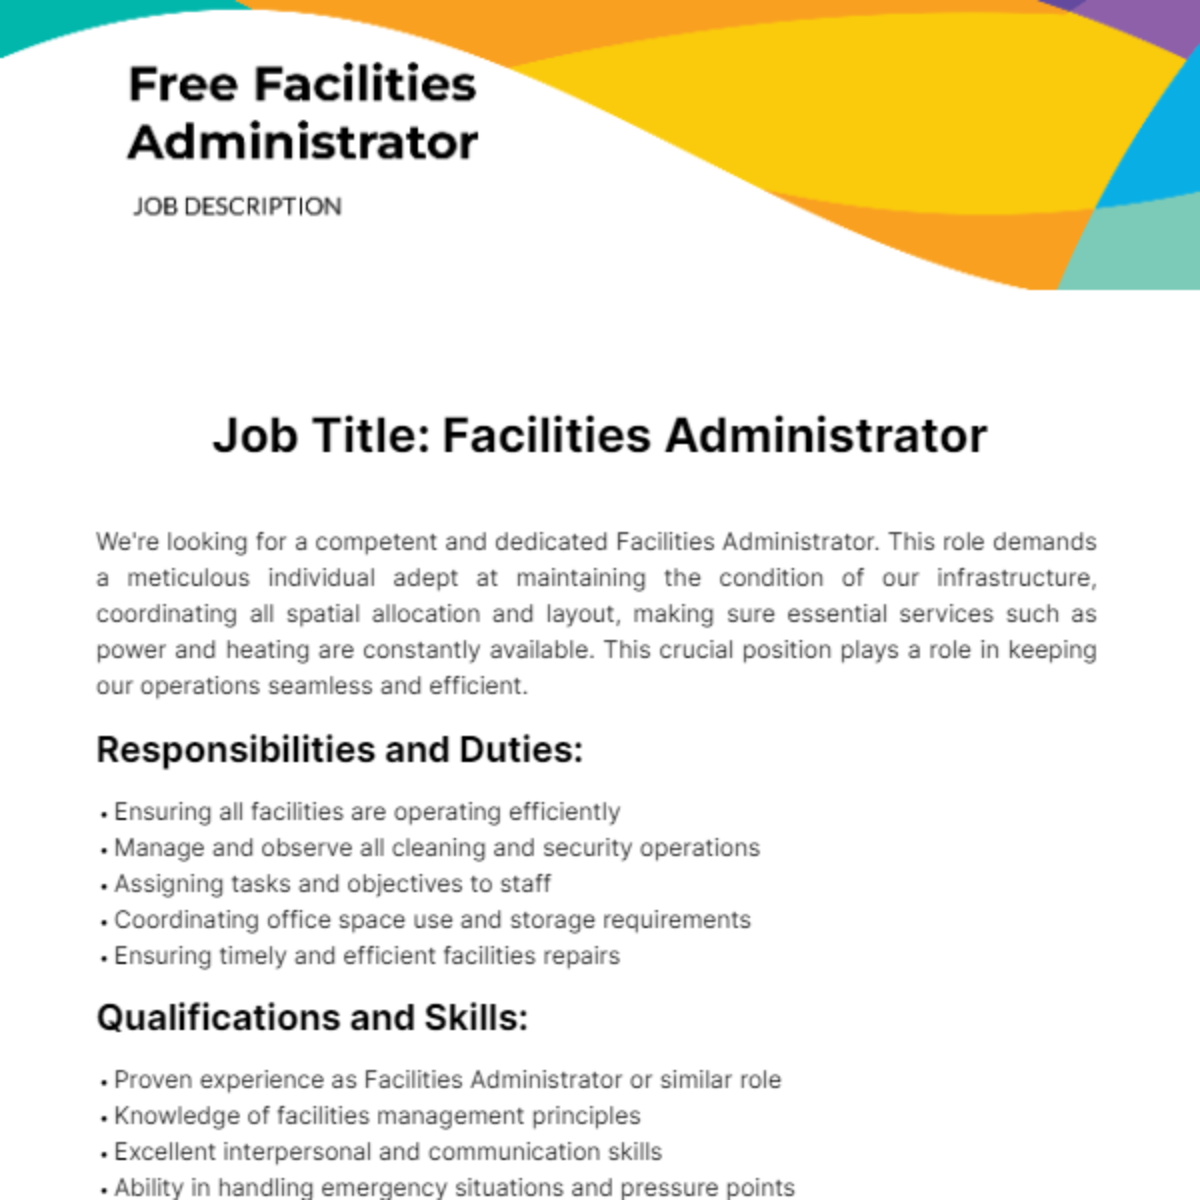 Free Facilities Administrator Job Description Template